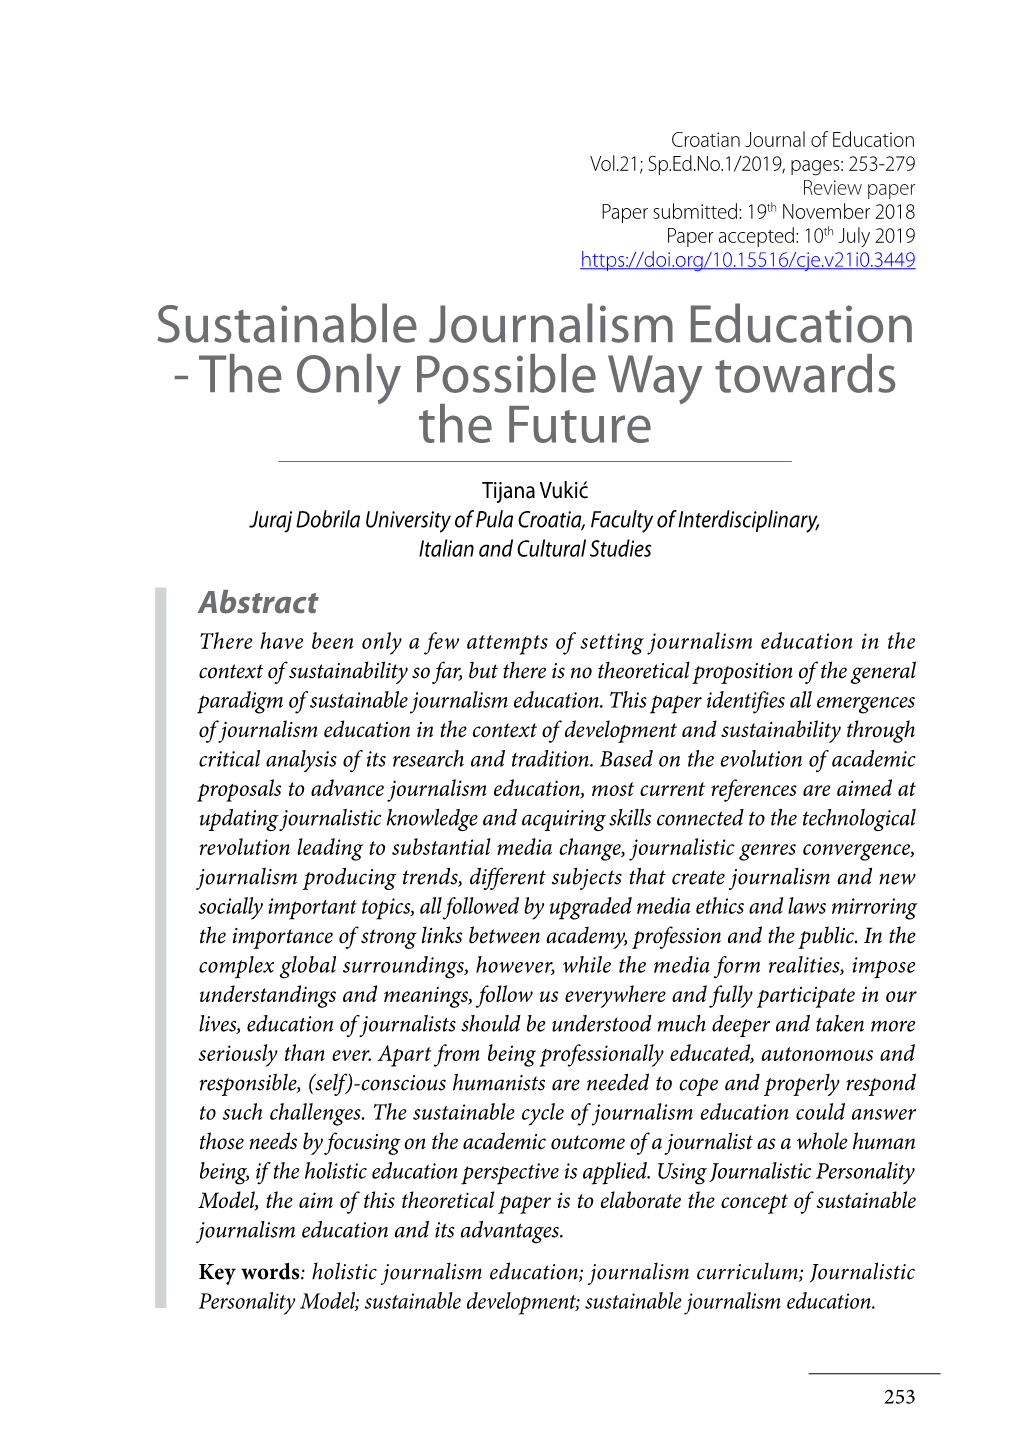 Sustainable Journalism Education